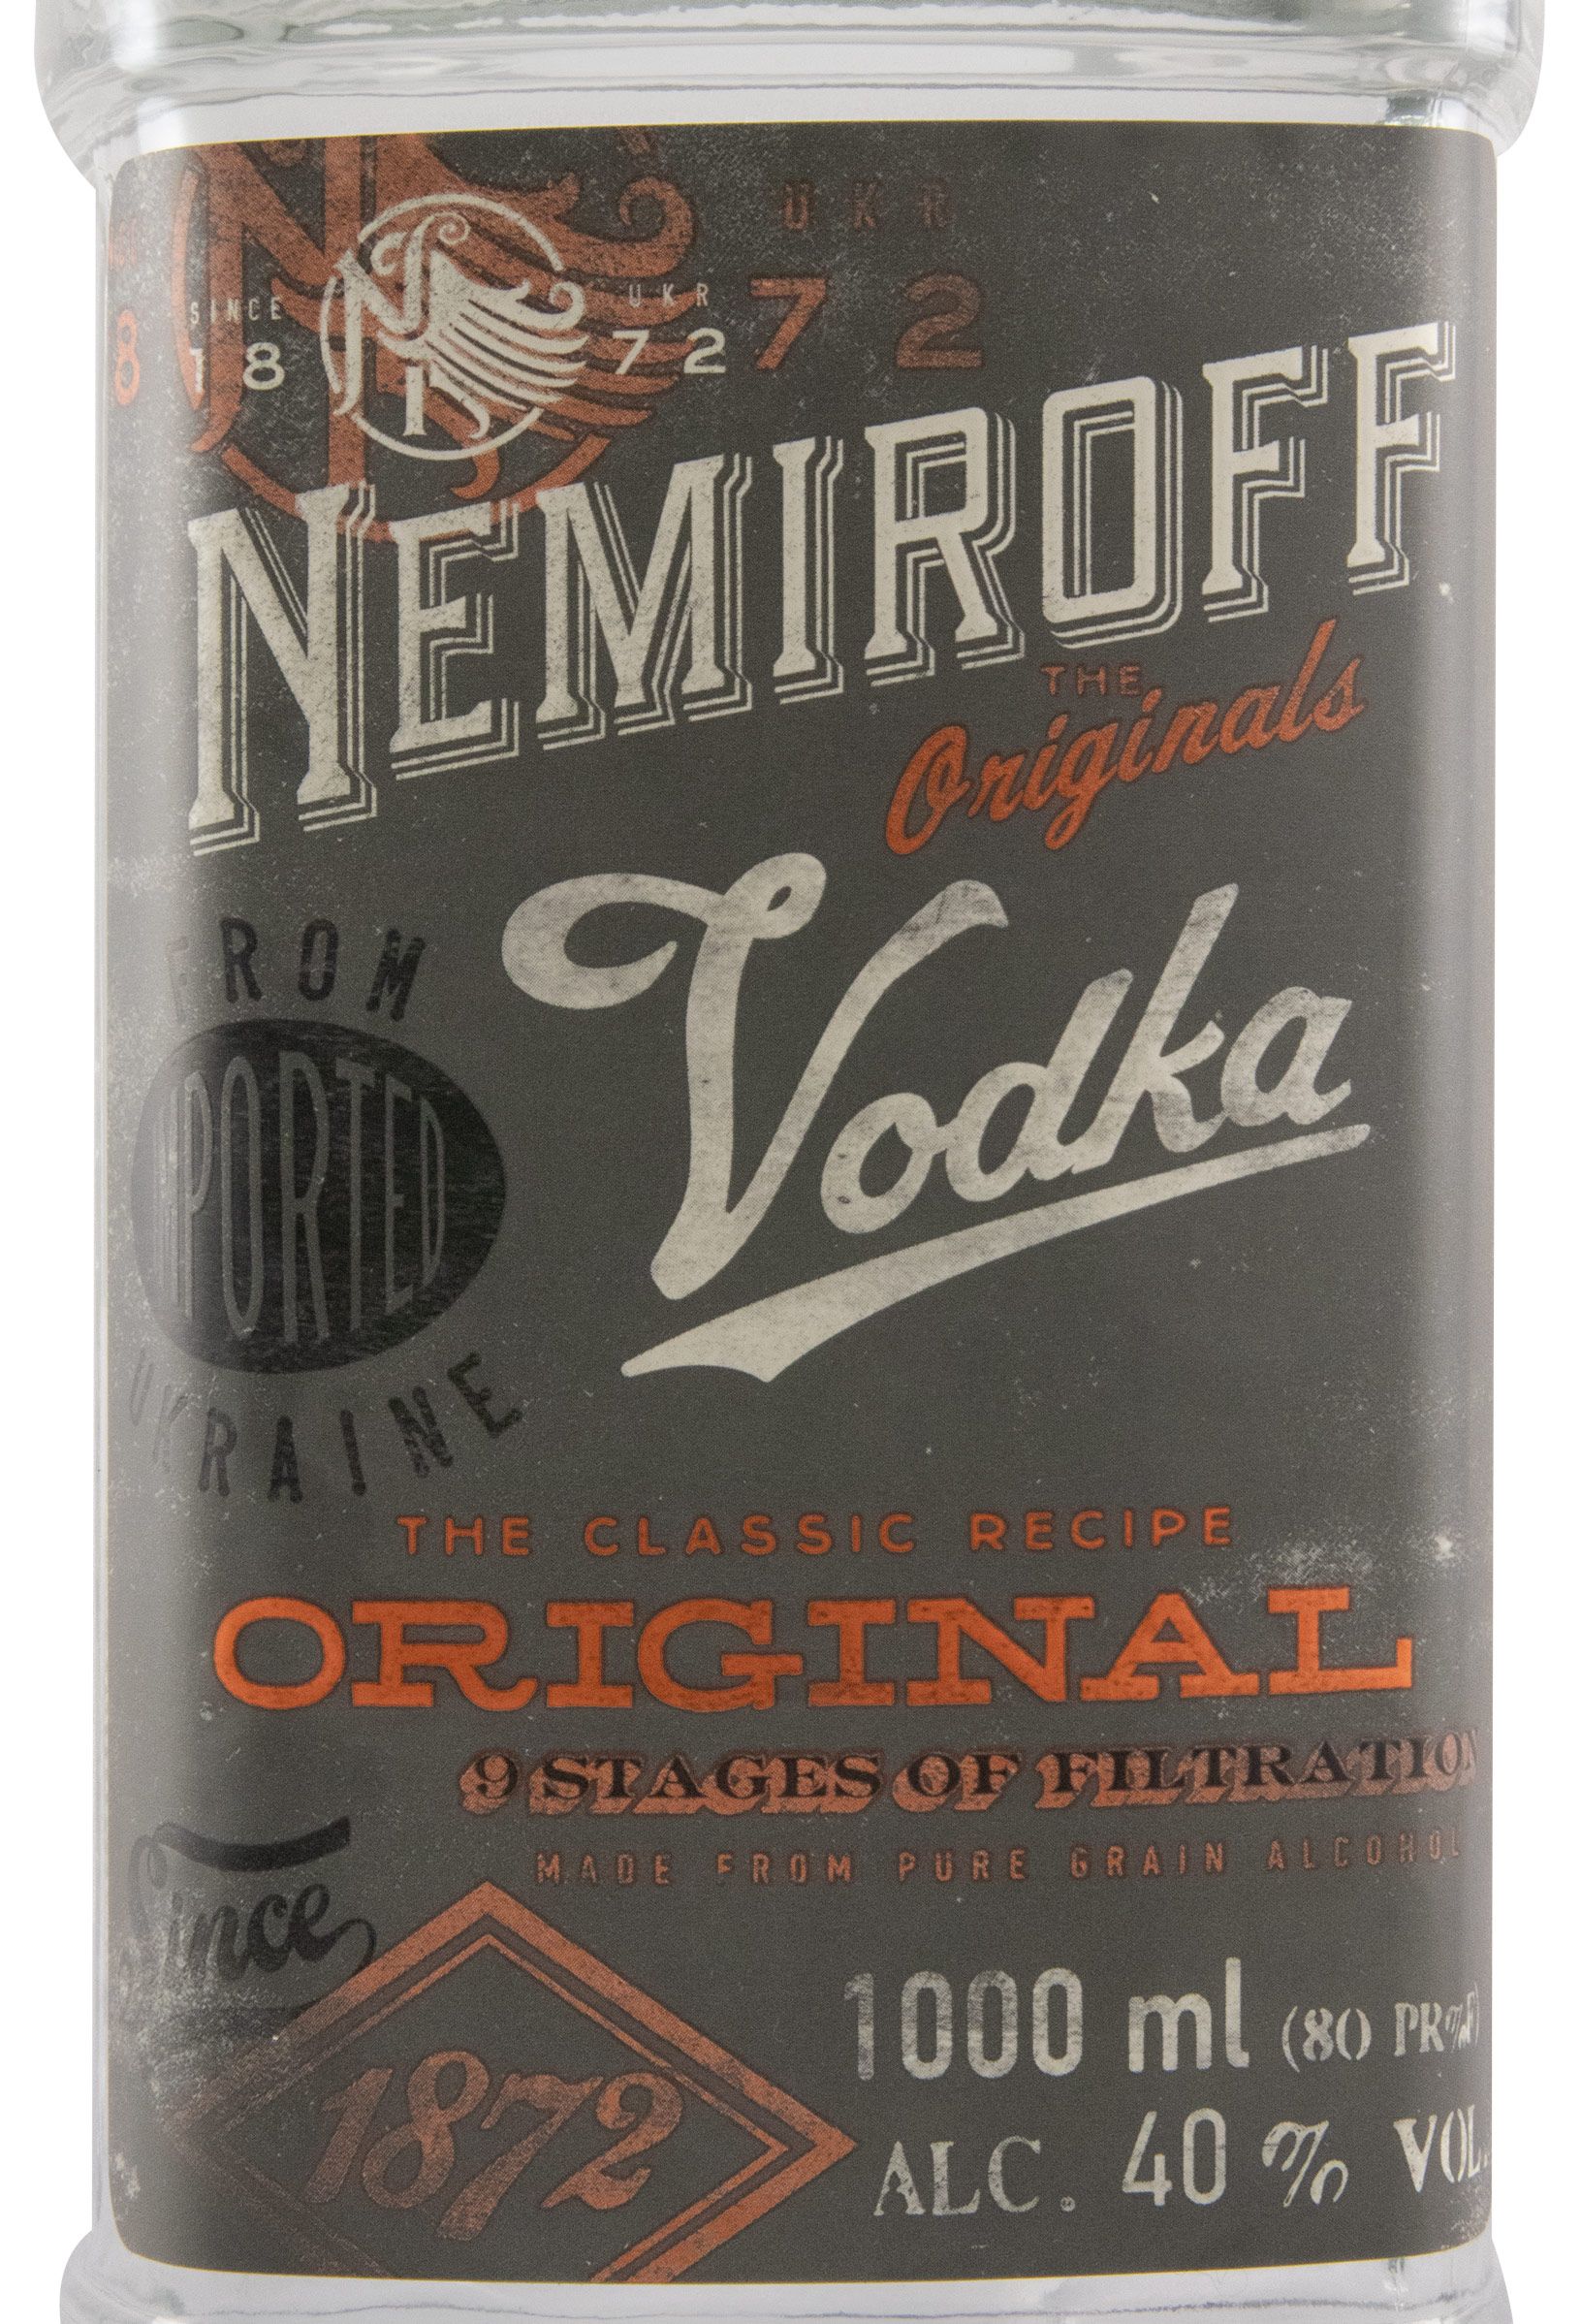 Vodka Nemiroff Original 1L